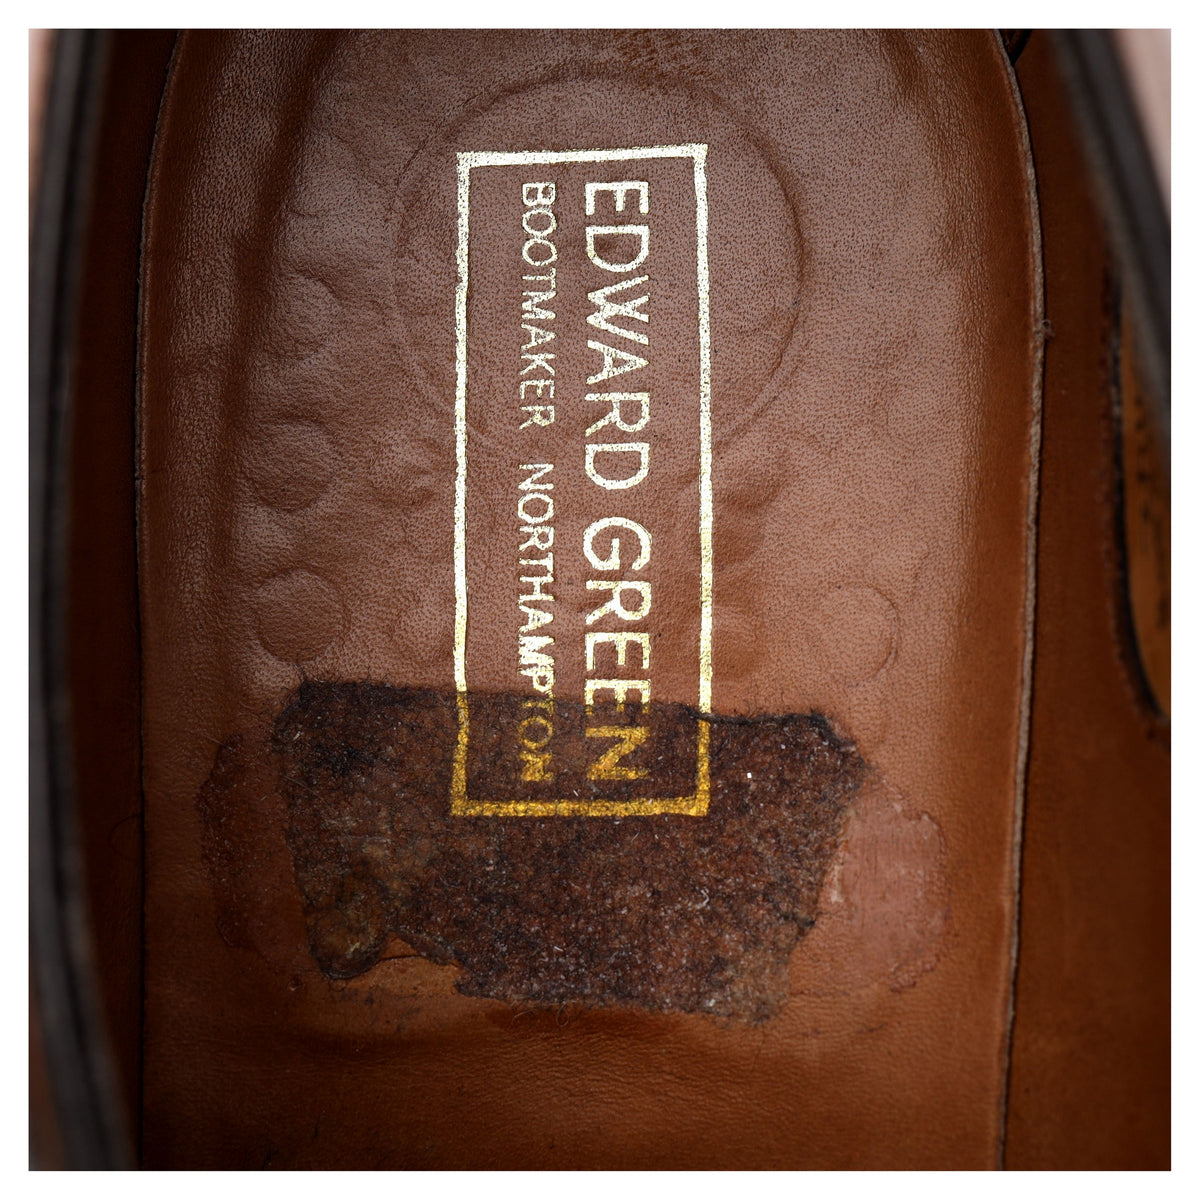 Tan Brown Leather Monk Strap UK 10.5 D